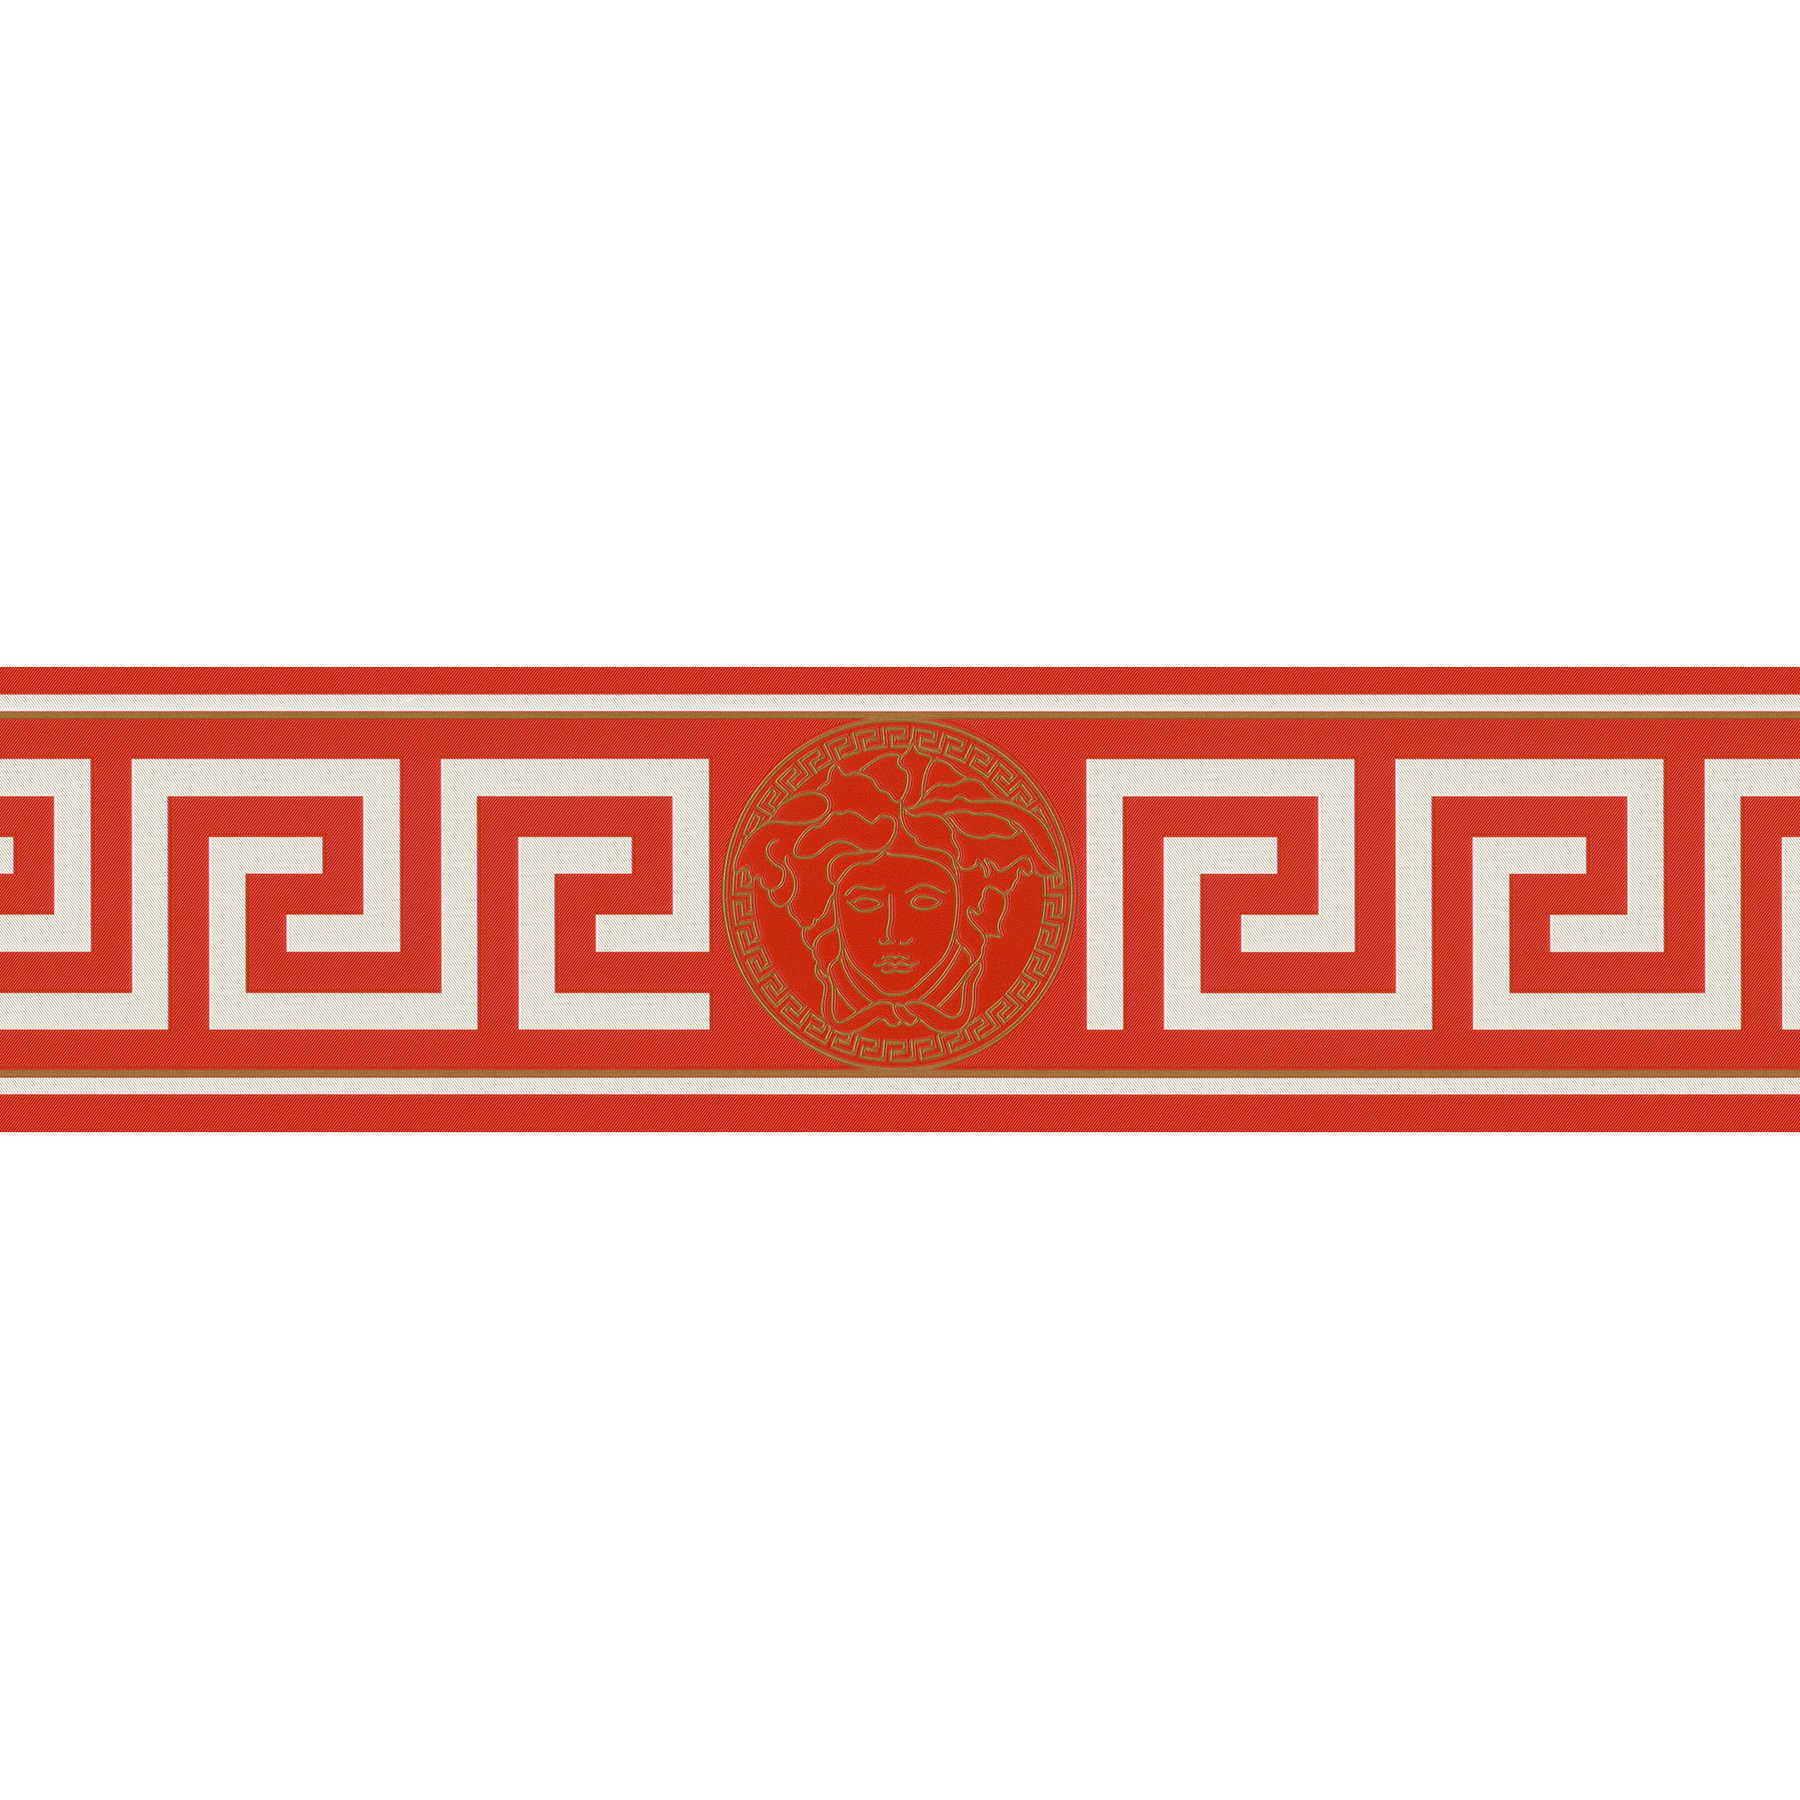 VERSACE wallpaper border with meander design - metallic, red
